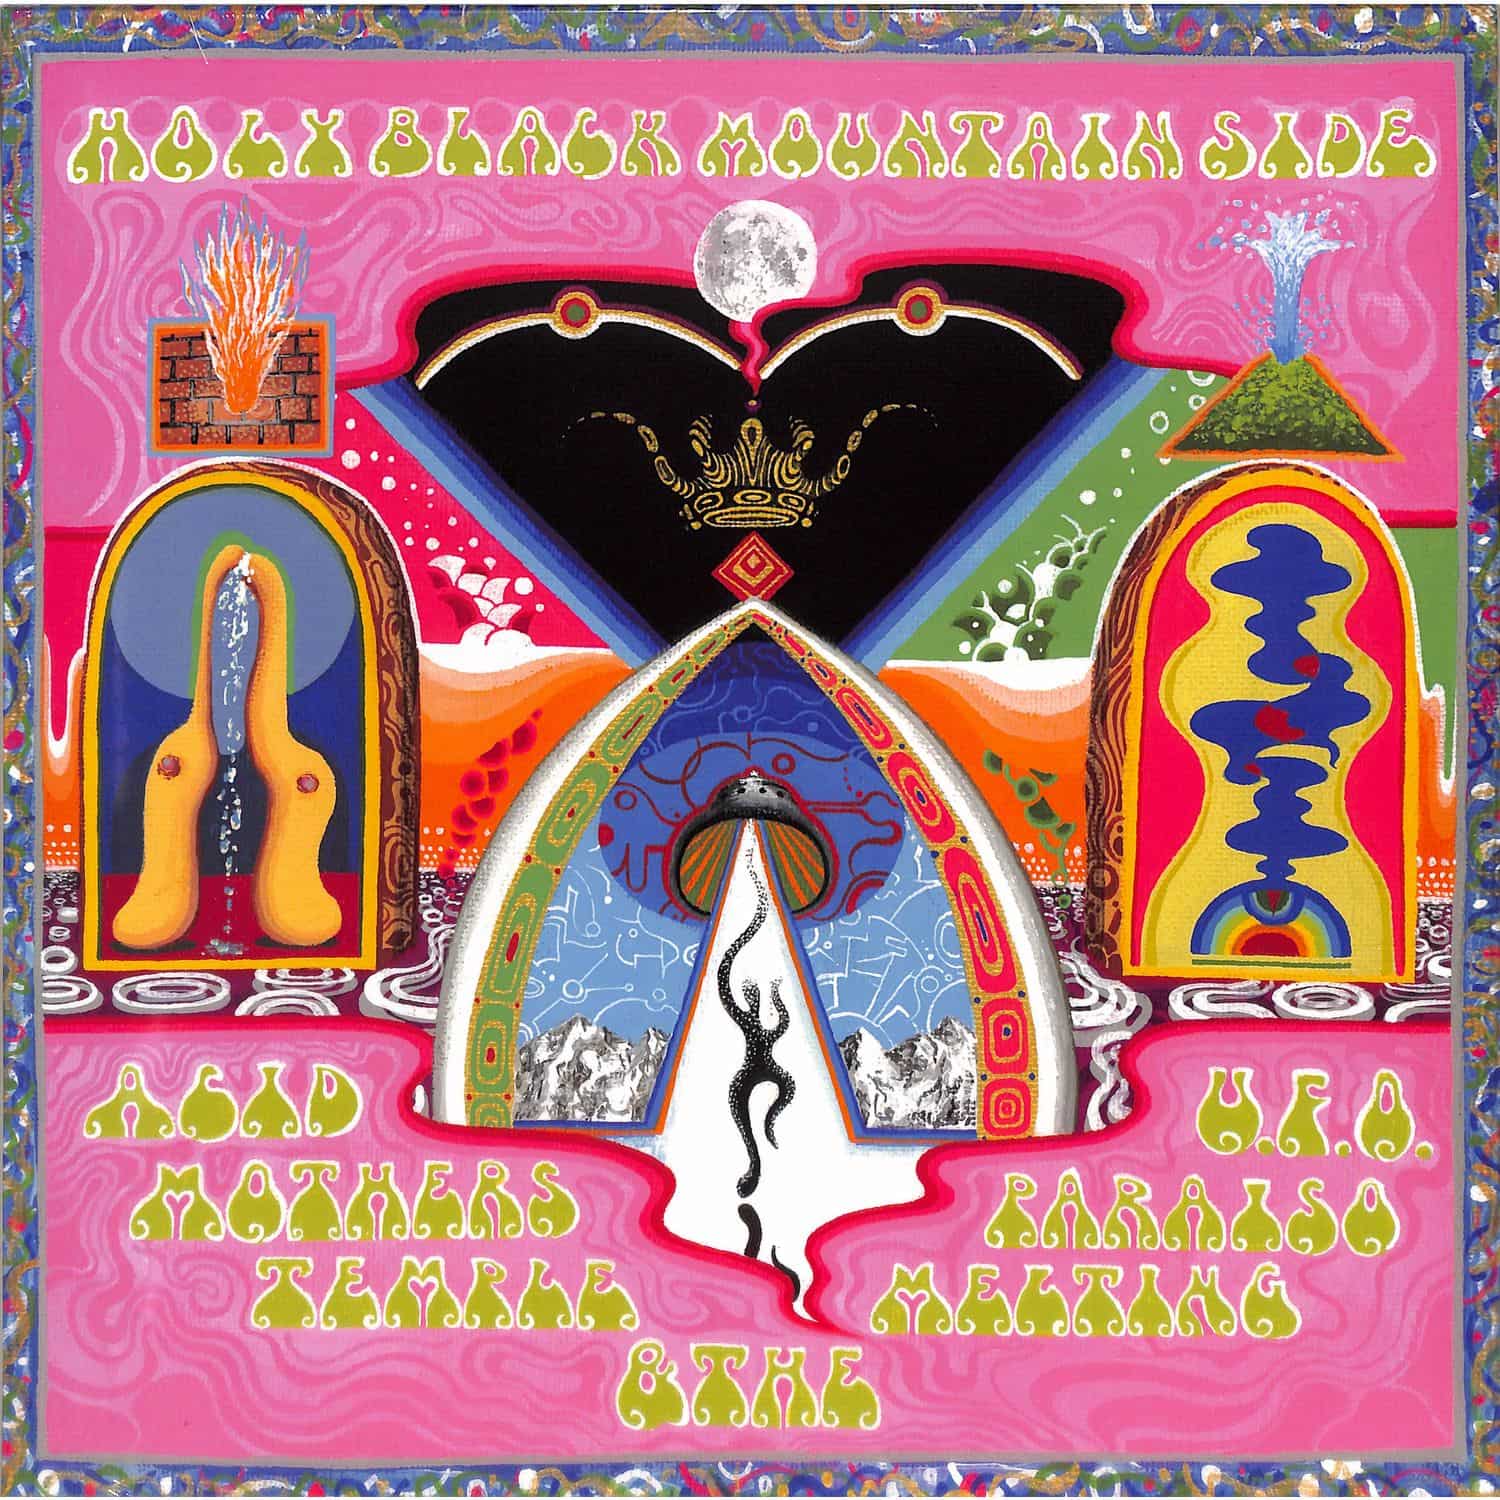 Acid Mothers Temple & The Melting Paraiso UFO - HOLY BLACK MOUNTAIN SIDE 